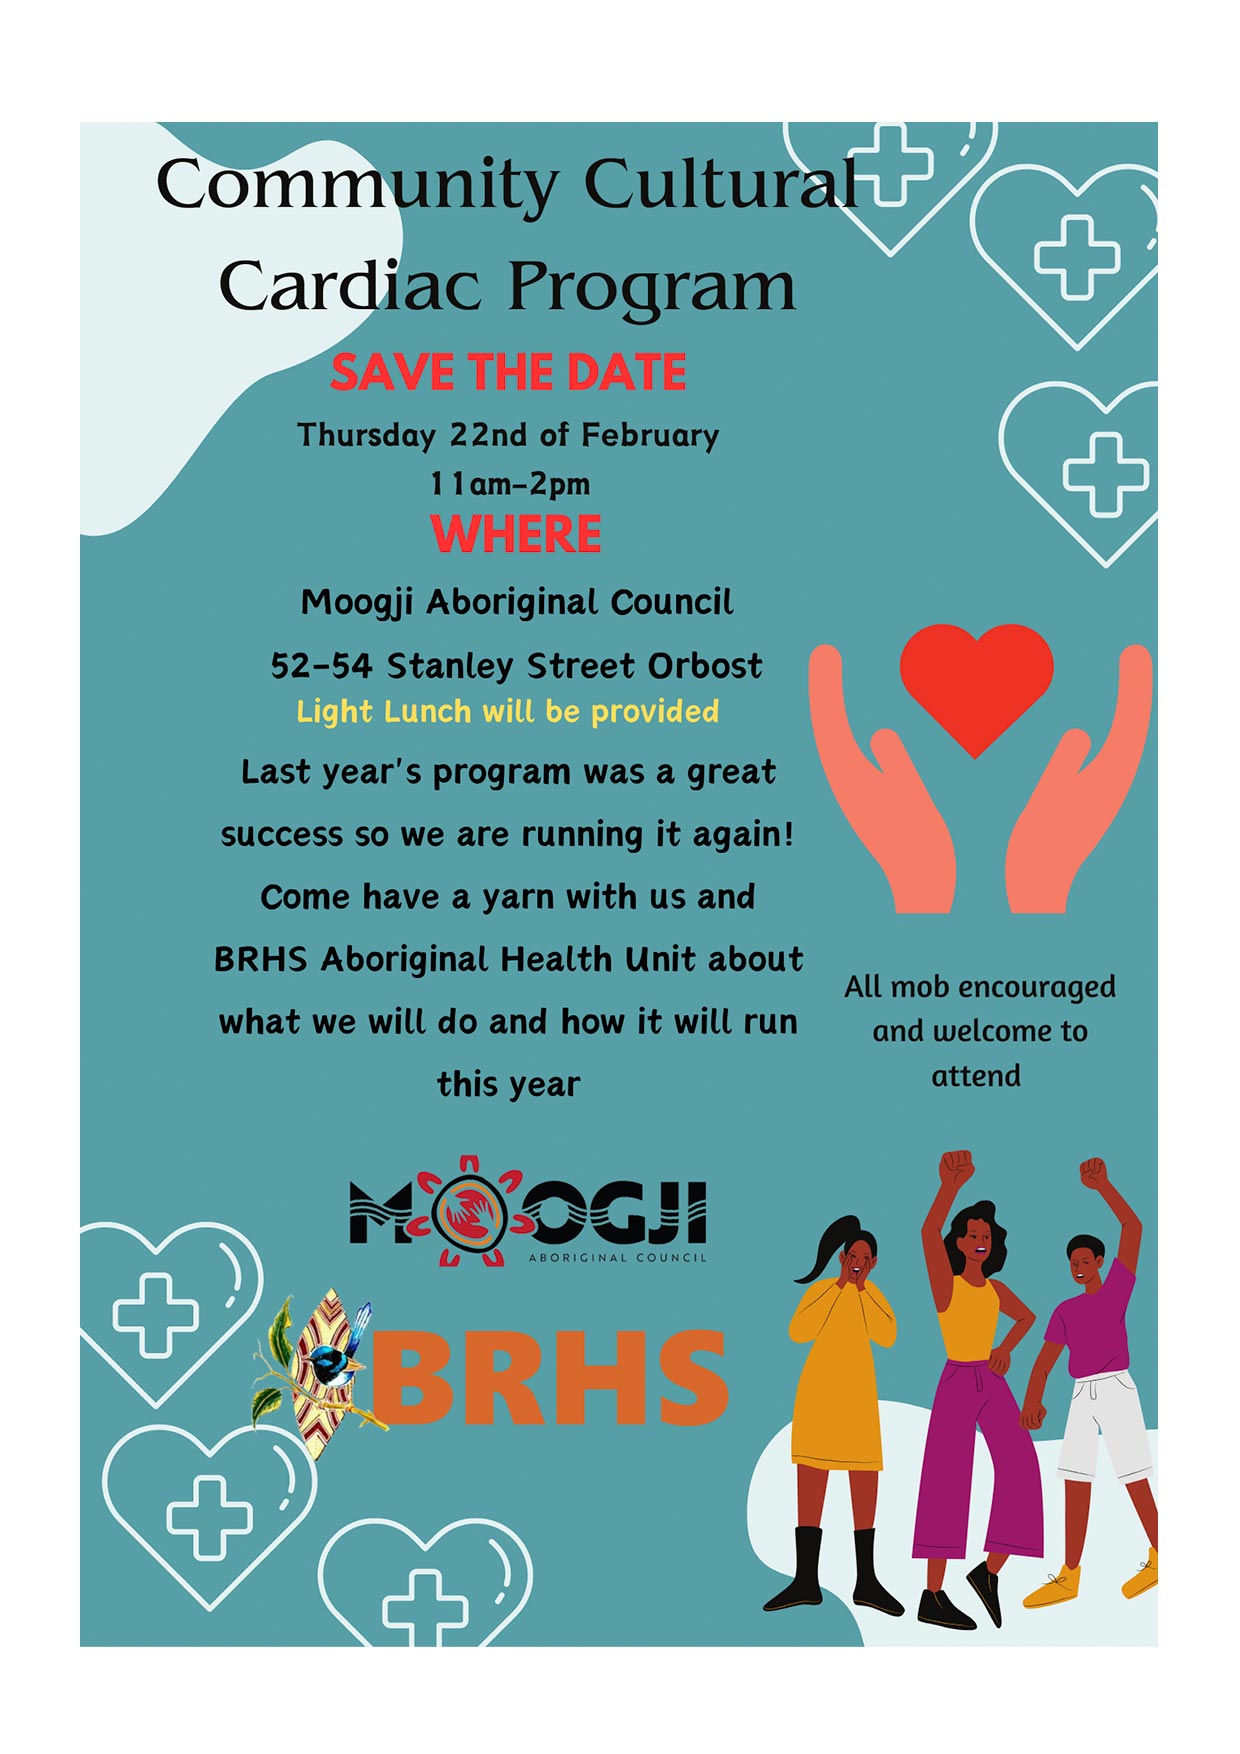 Community Cultural Cardiac Program. 22nd Feb at 11am-2pm. Moogji, Orbost